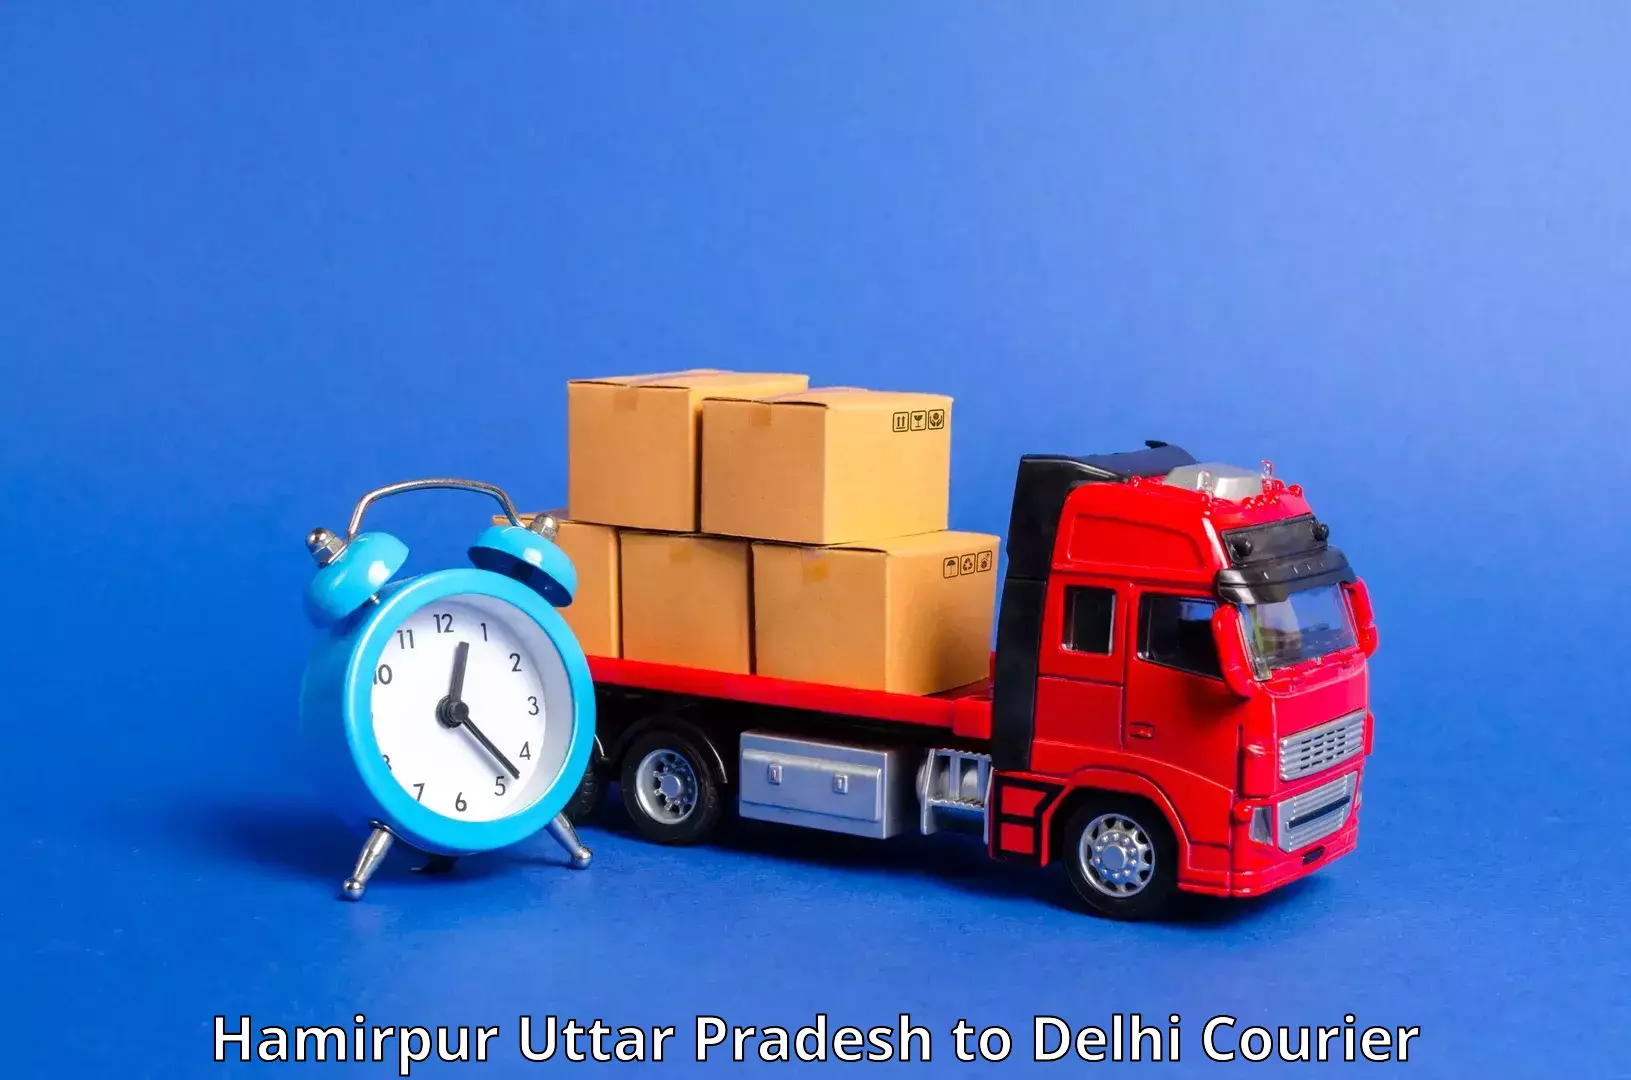 High-priority parcel service Hamirpur Uttar Pradesh to Delhi